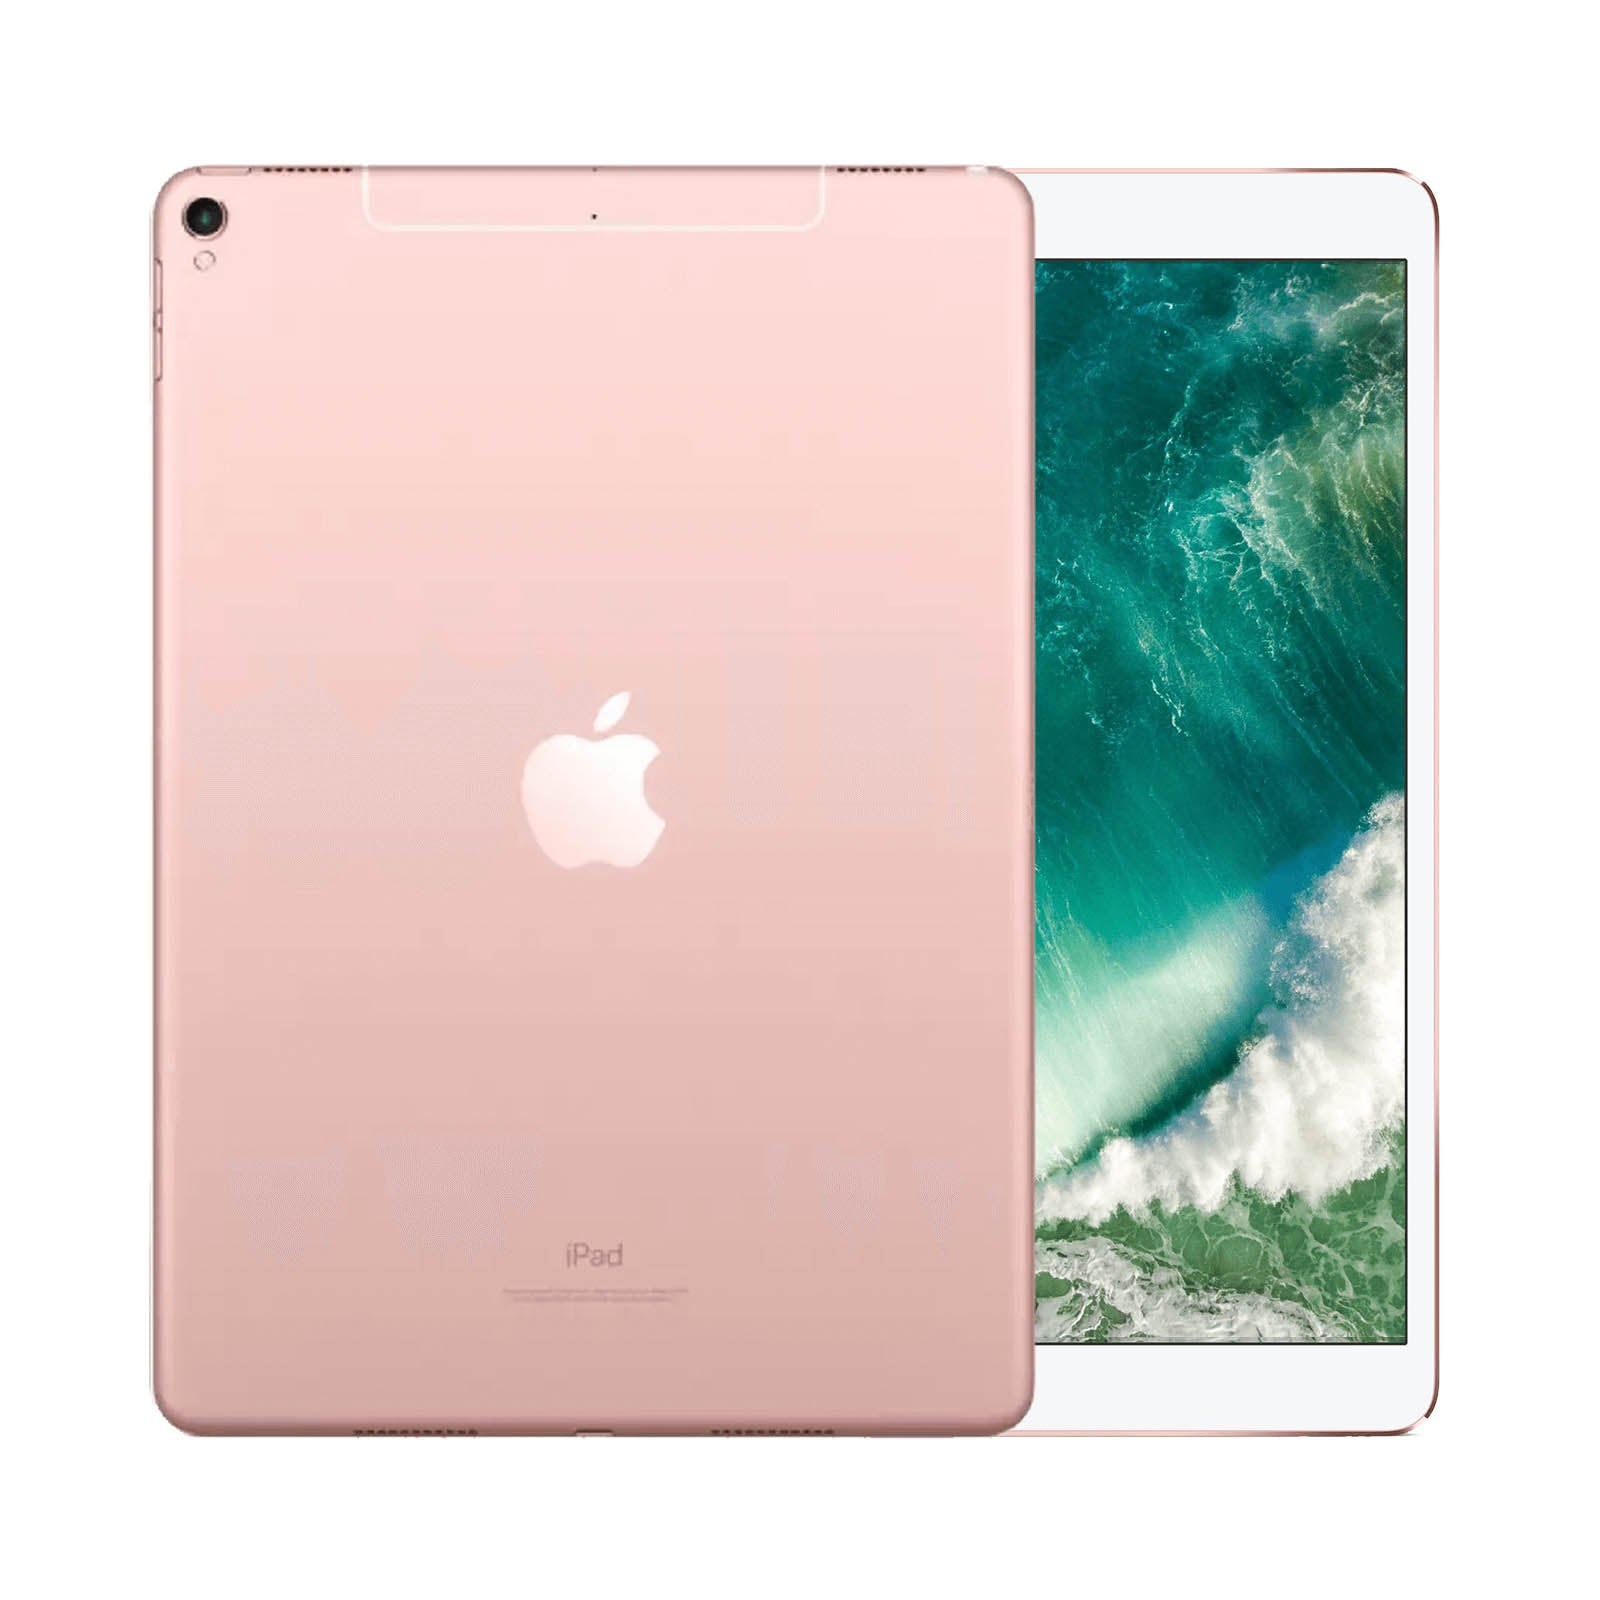 Apple iPad Pro 10.5" 256GB Rose Gold - Unlocked